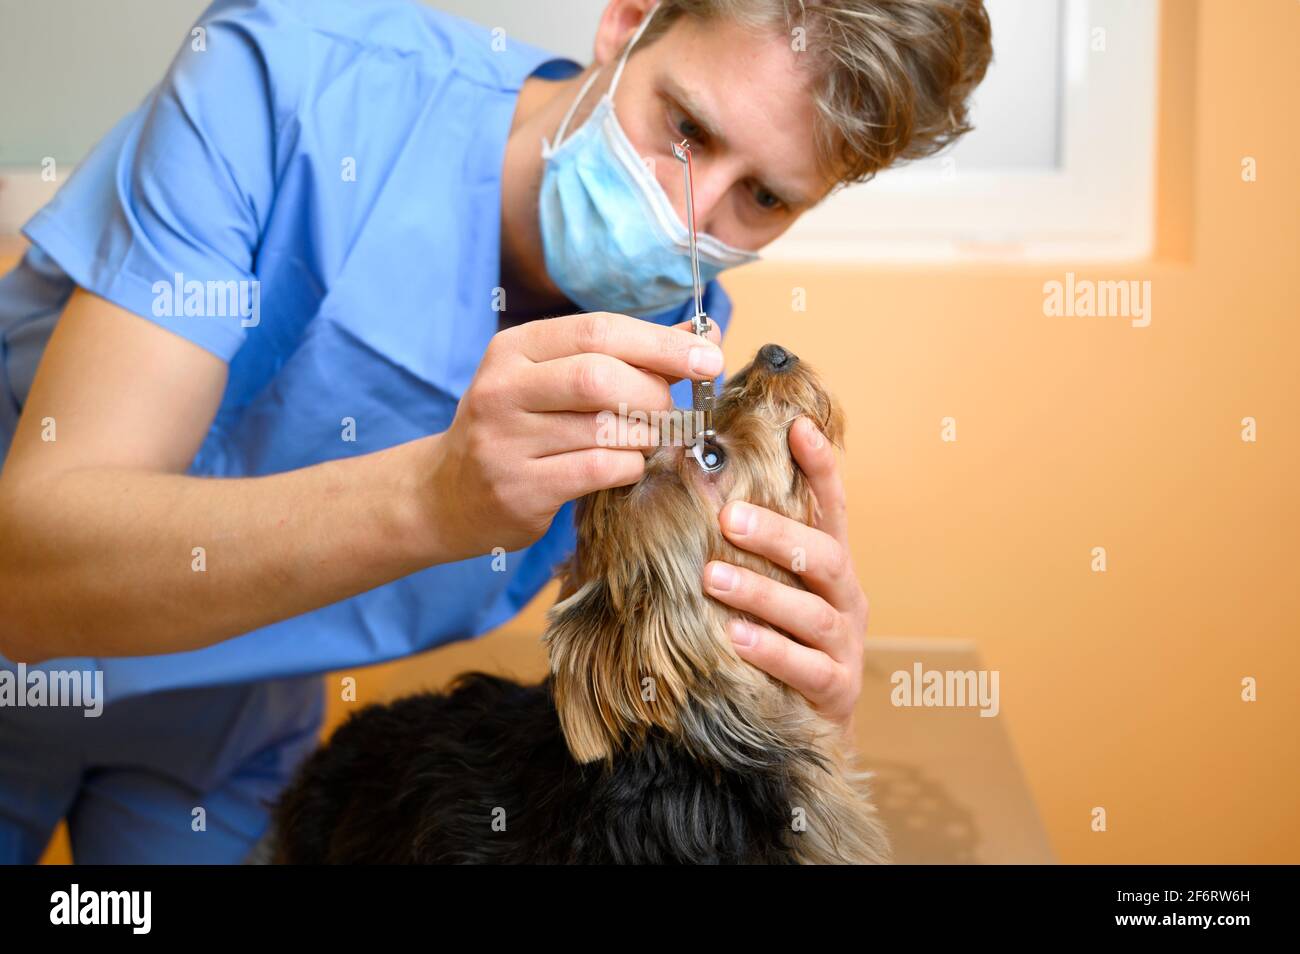 Male professional veterinarian doctor examining dog eye. High quality photo. Stock Photo